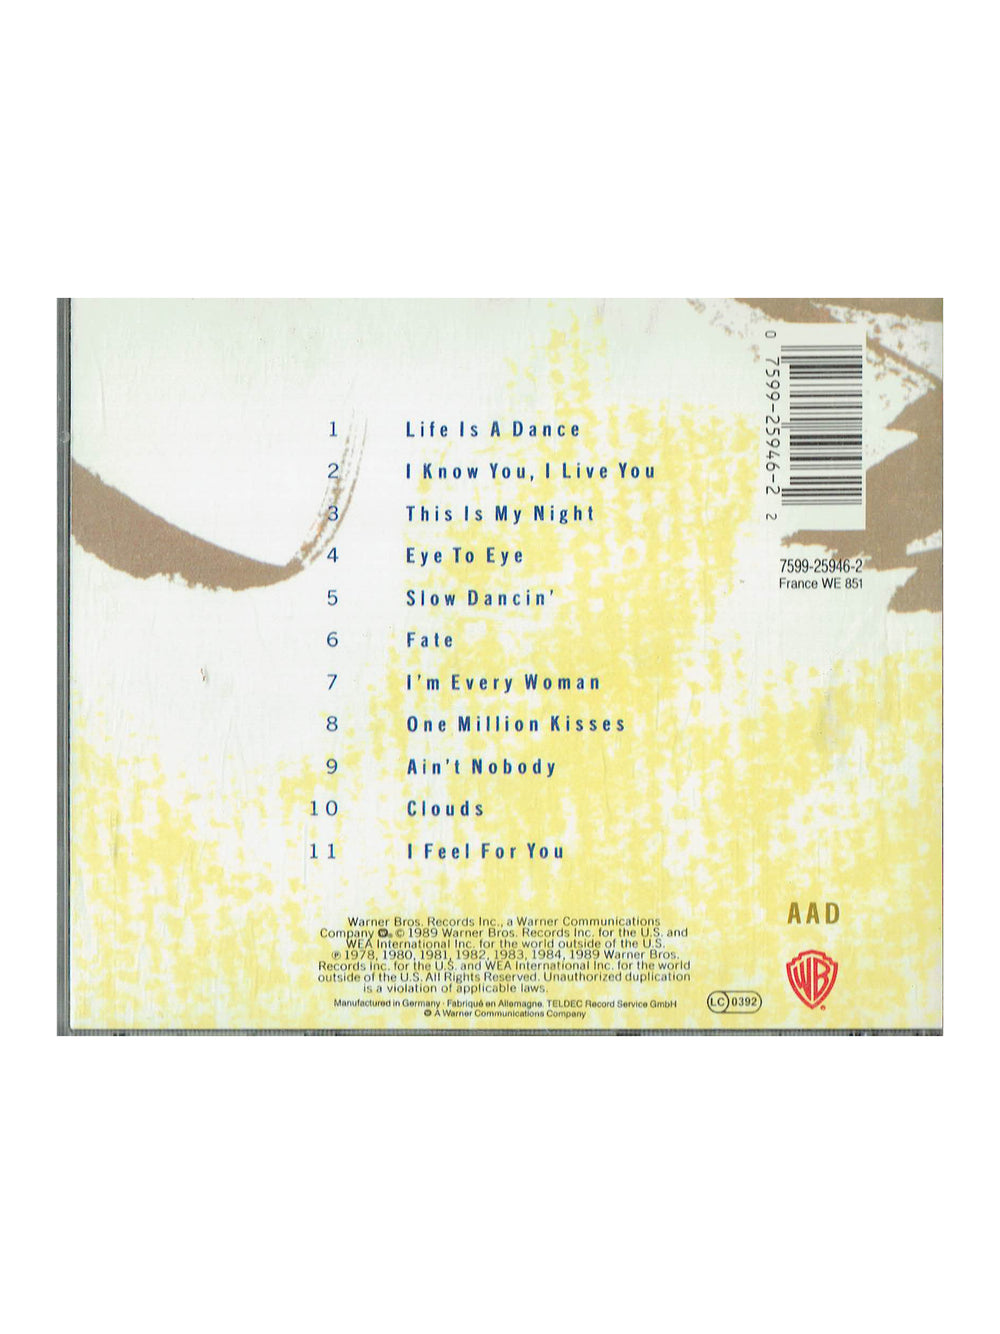 Chaka Khan The Remix Project CD Album UK/EU Release Inc I Feel For You By Prince